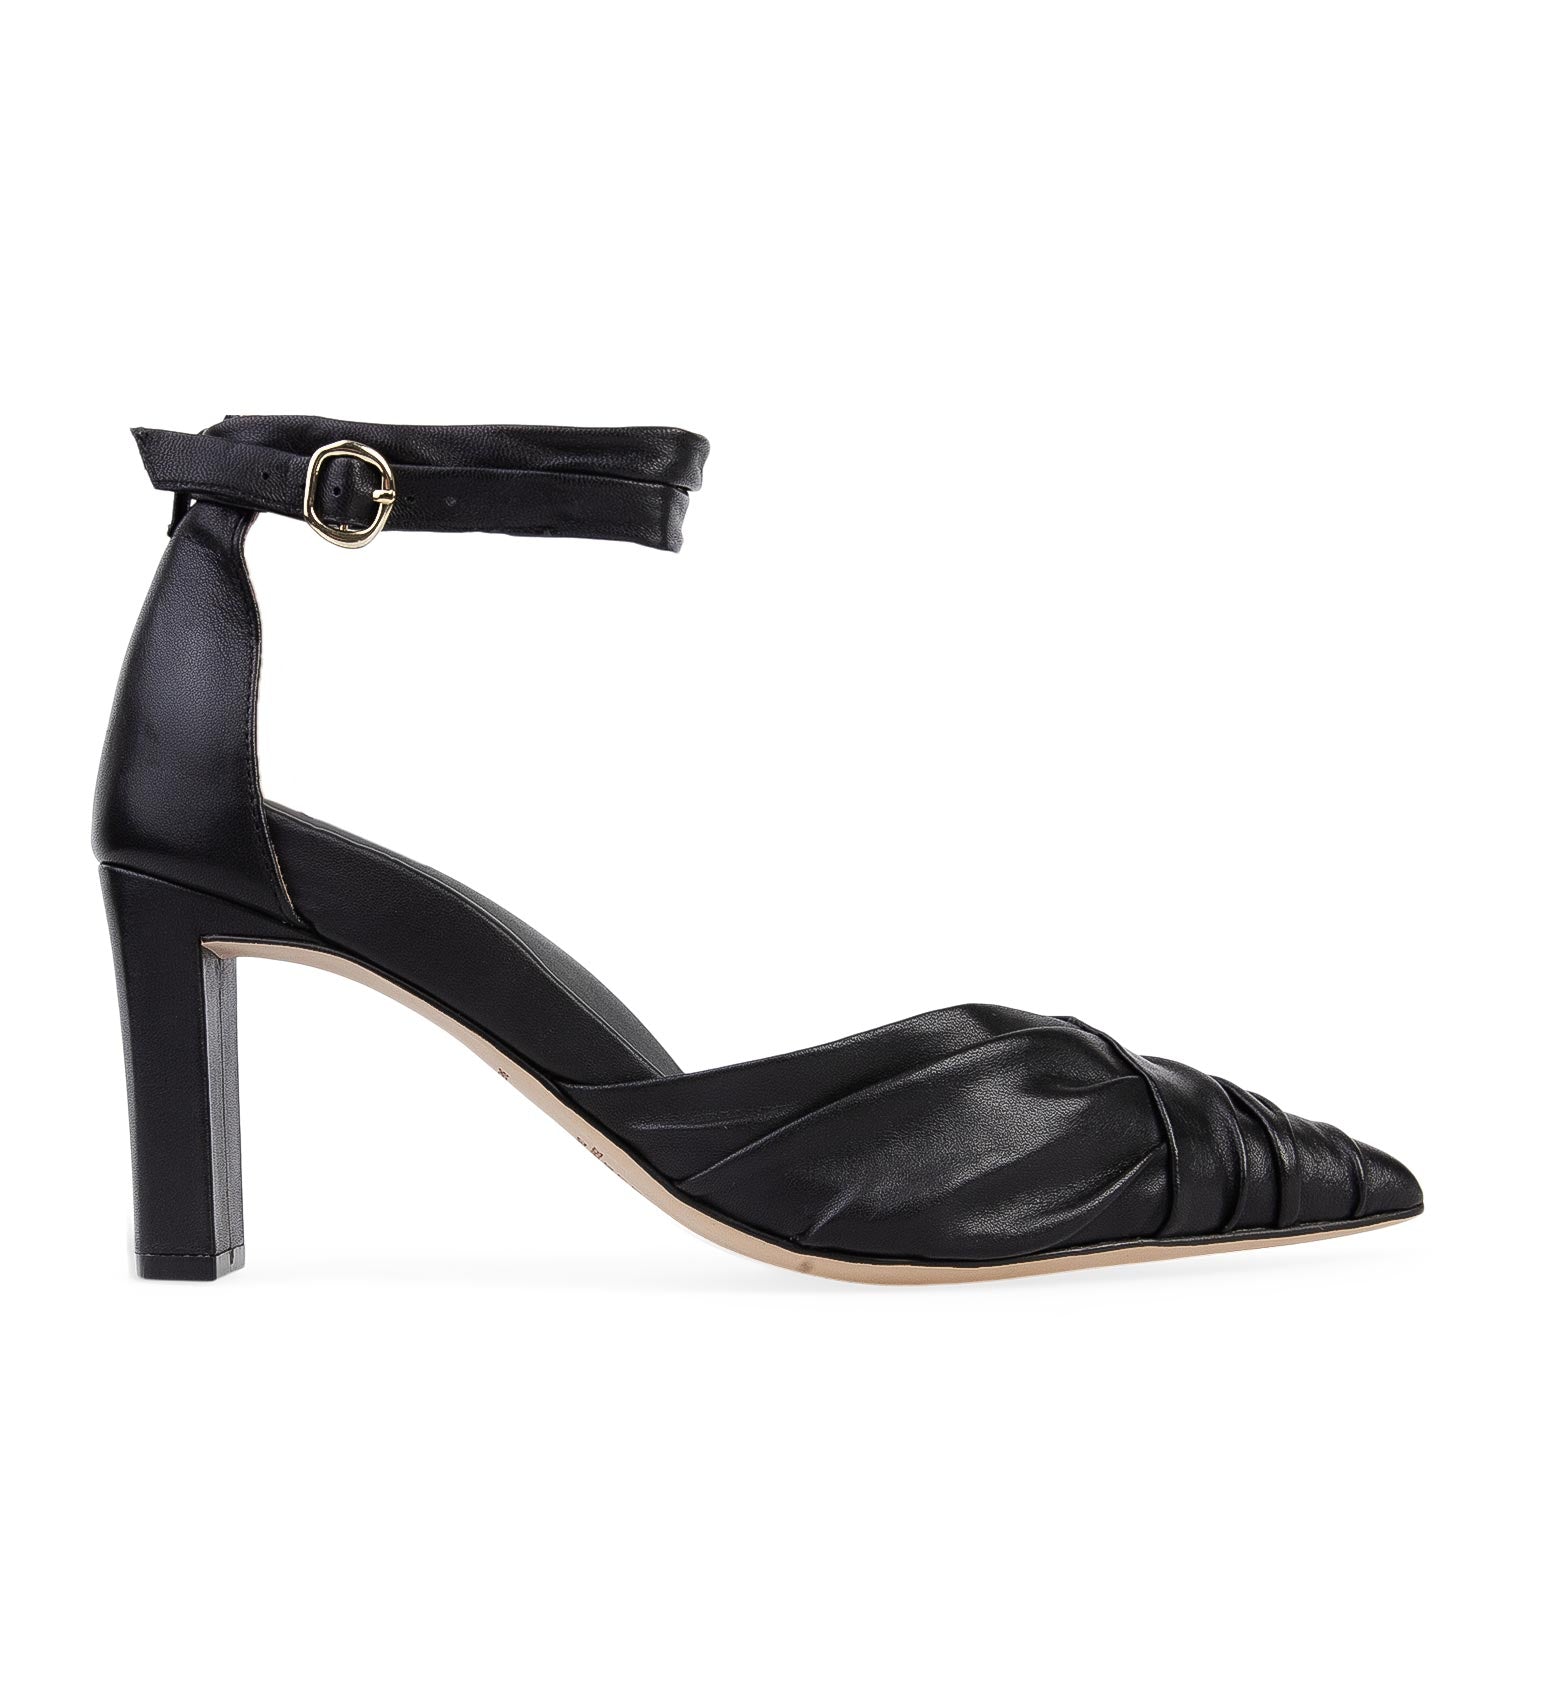 Becard Black Leather High Heels | Bared Footwear